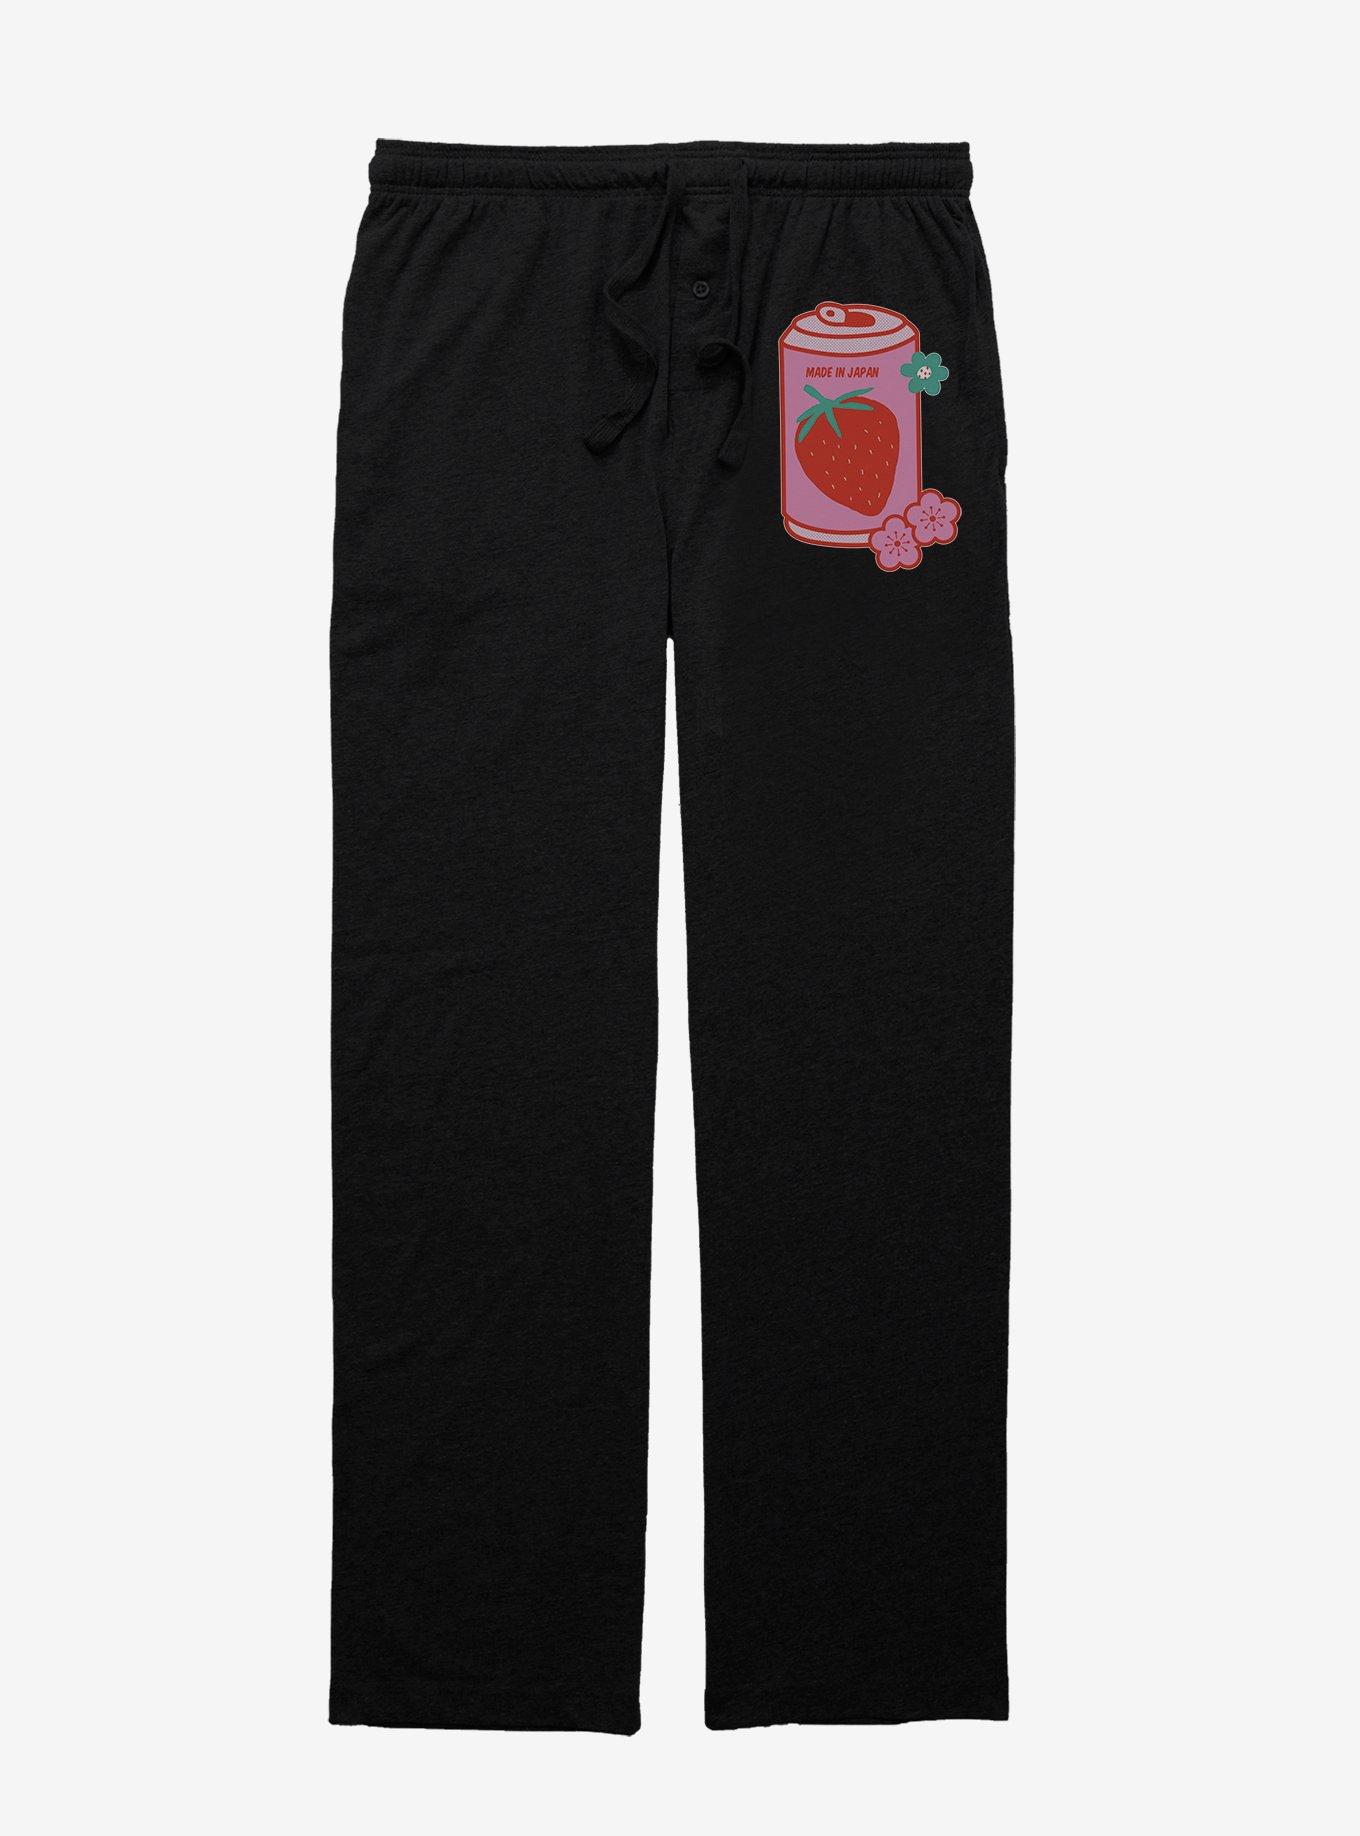 Hello Kitty Strawberry Milk Pajama Pants